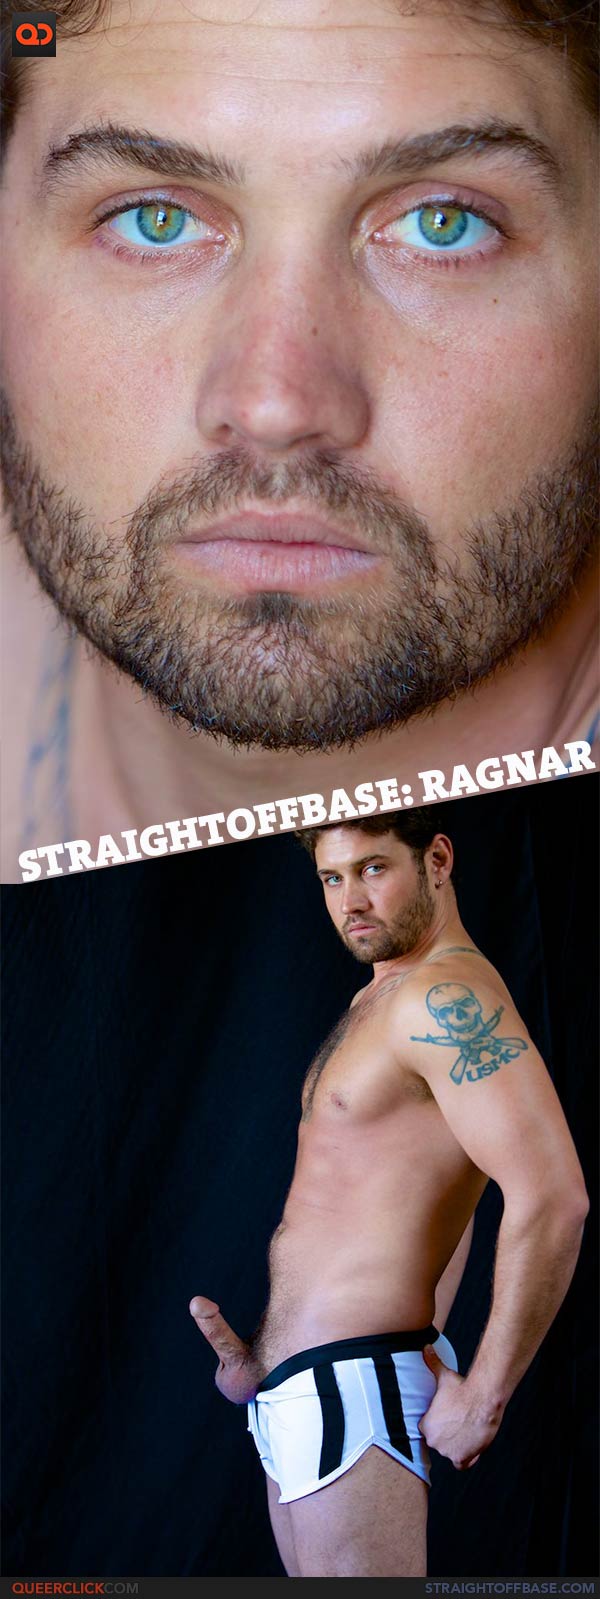 Straight Off Base: Ragnar